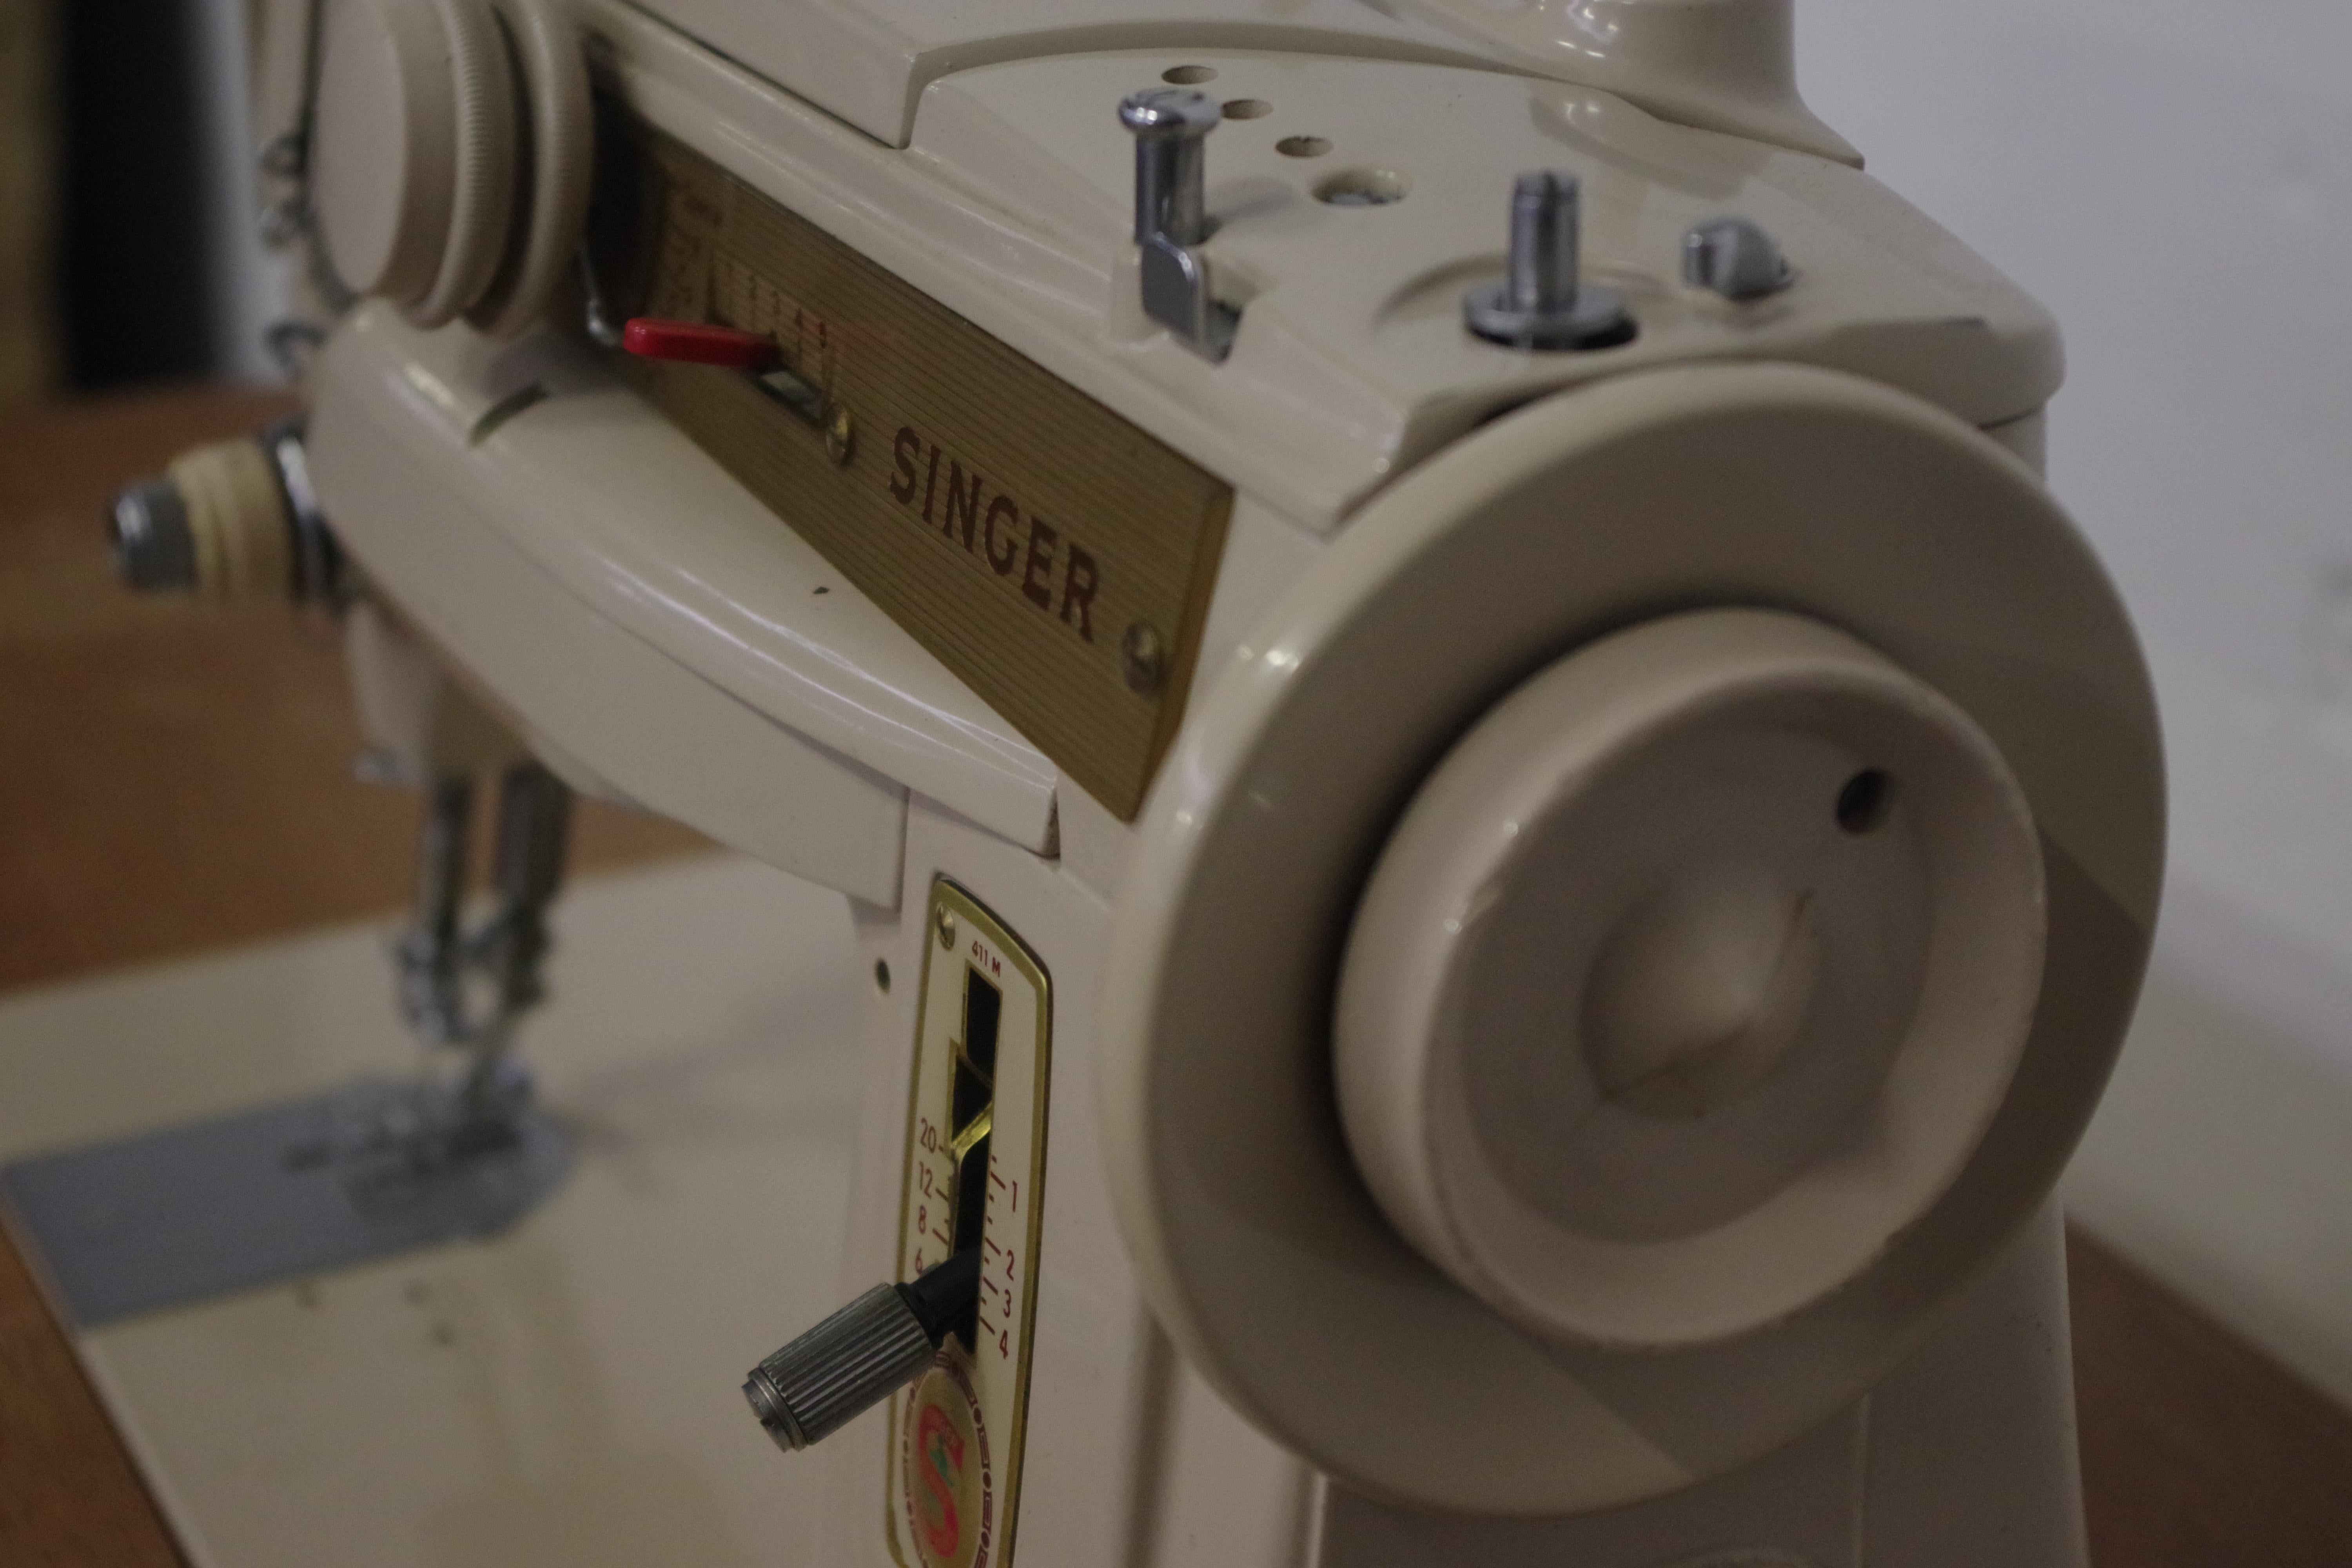 singer 411g sewing machine